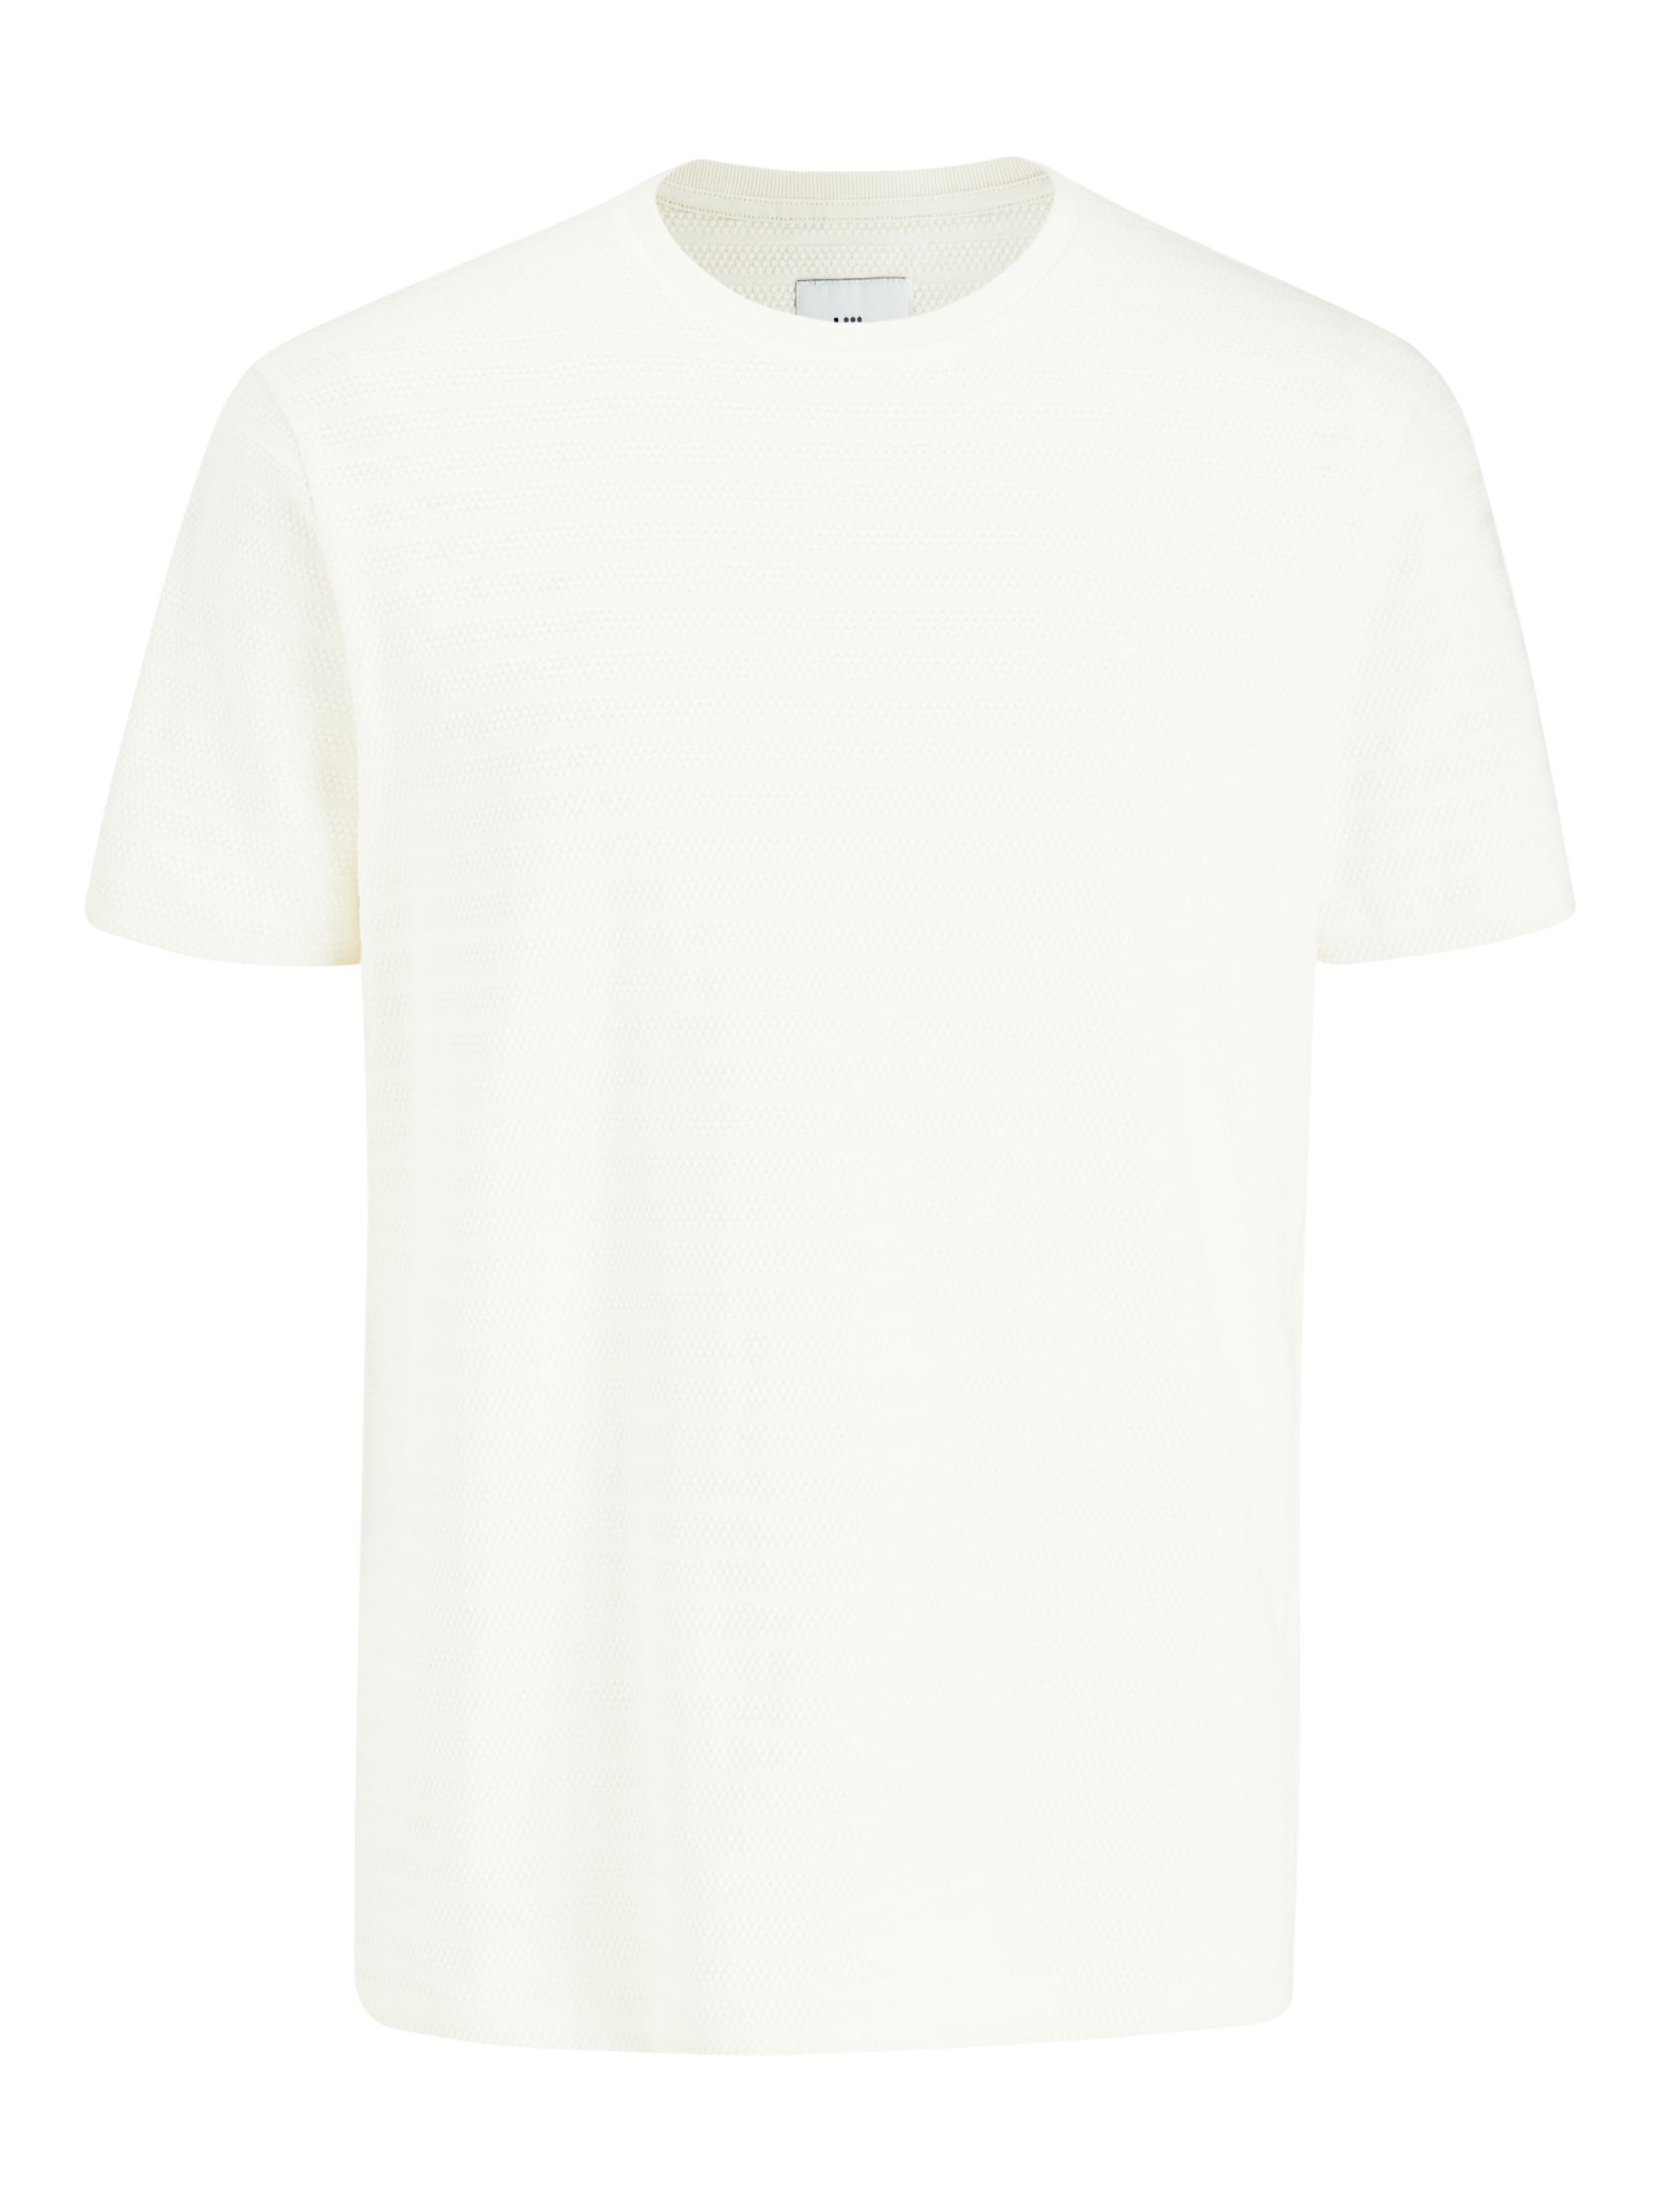 Kin Texture Crew Neck T-Shirt, White at John Lewis & Partners